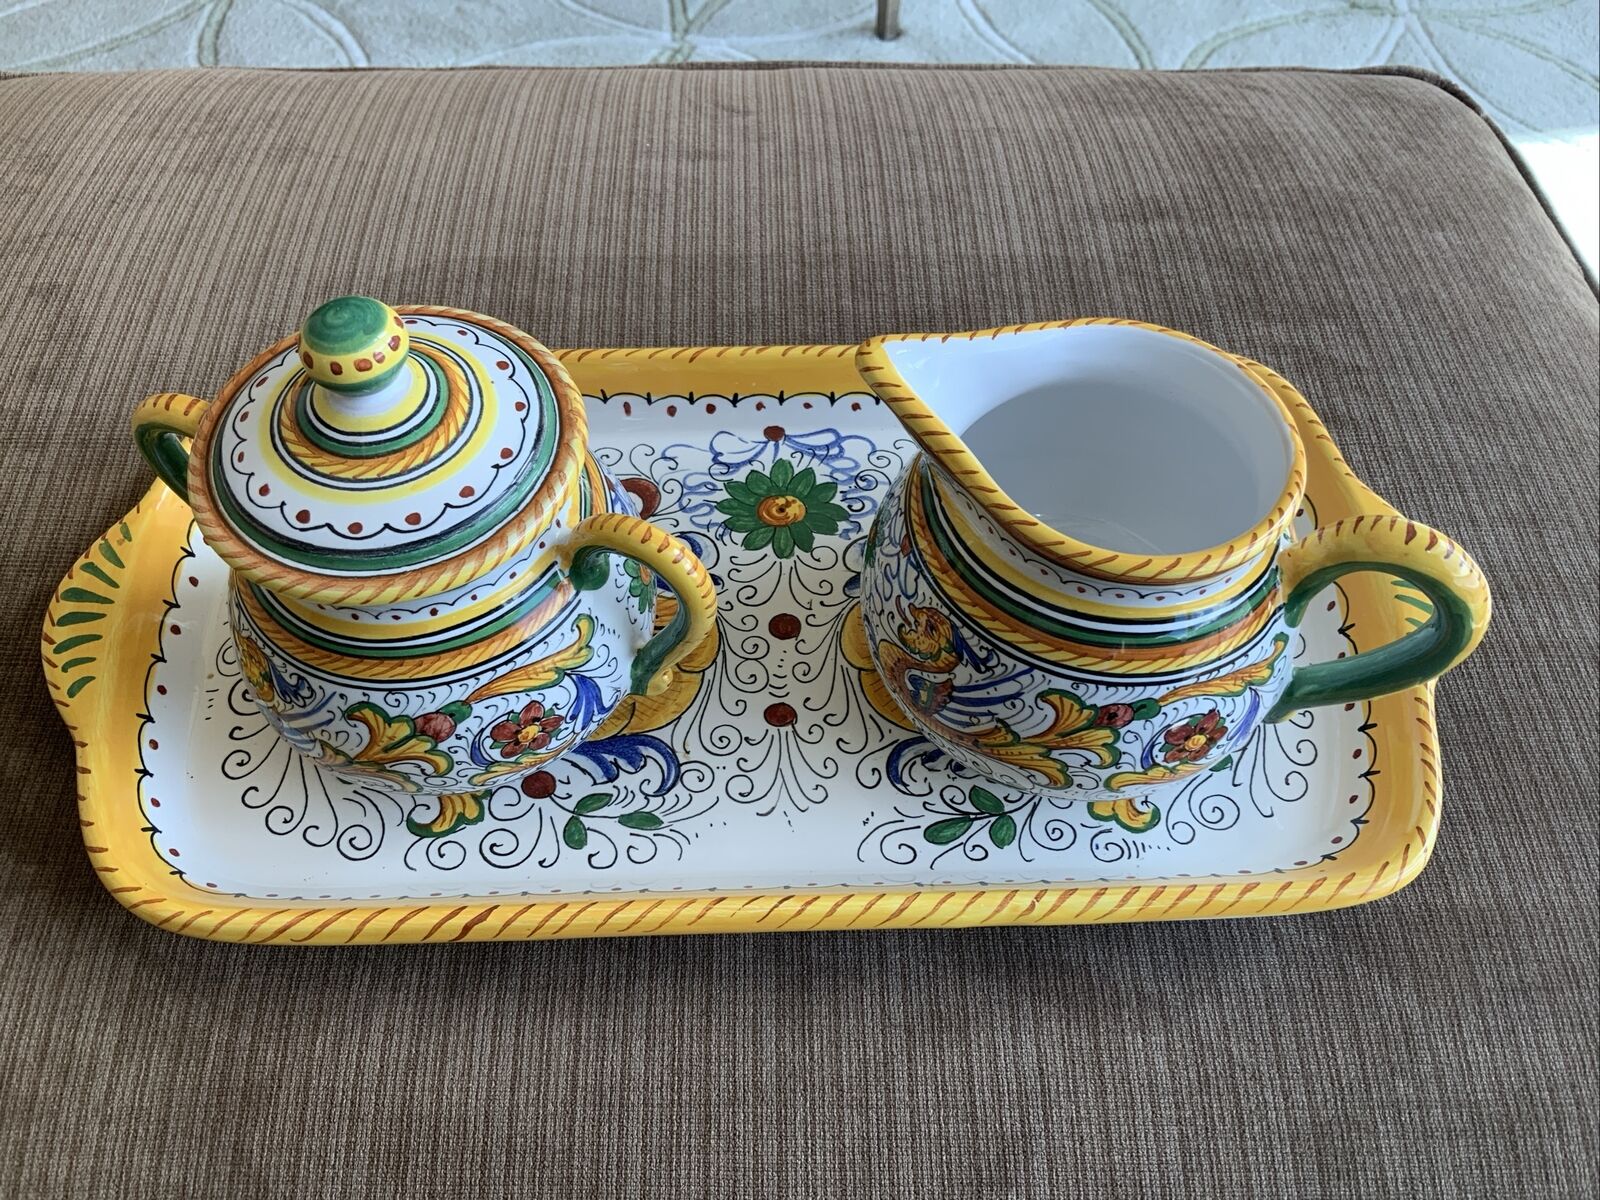 Vintage Deruta Italy Ceramic Raffaellesco Covered Sugar and Creamer Set w/Tray